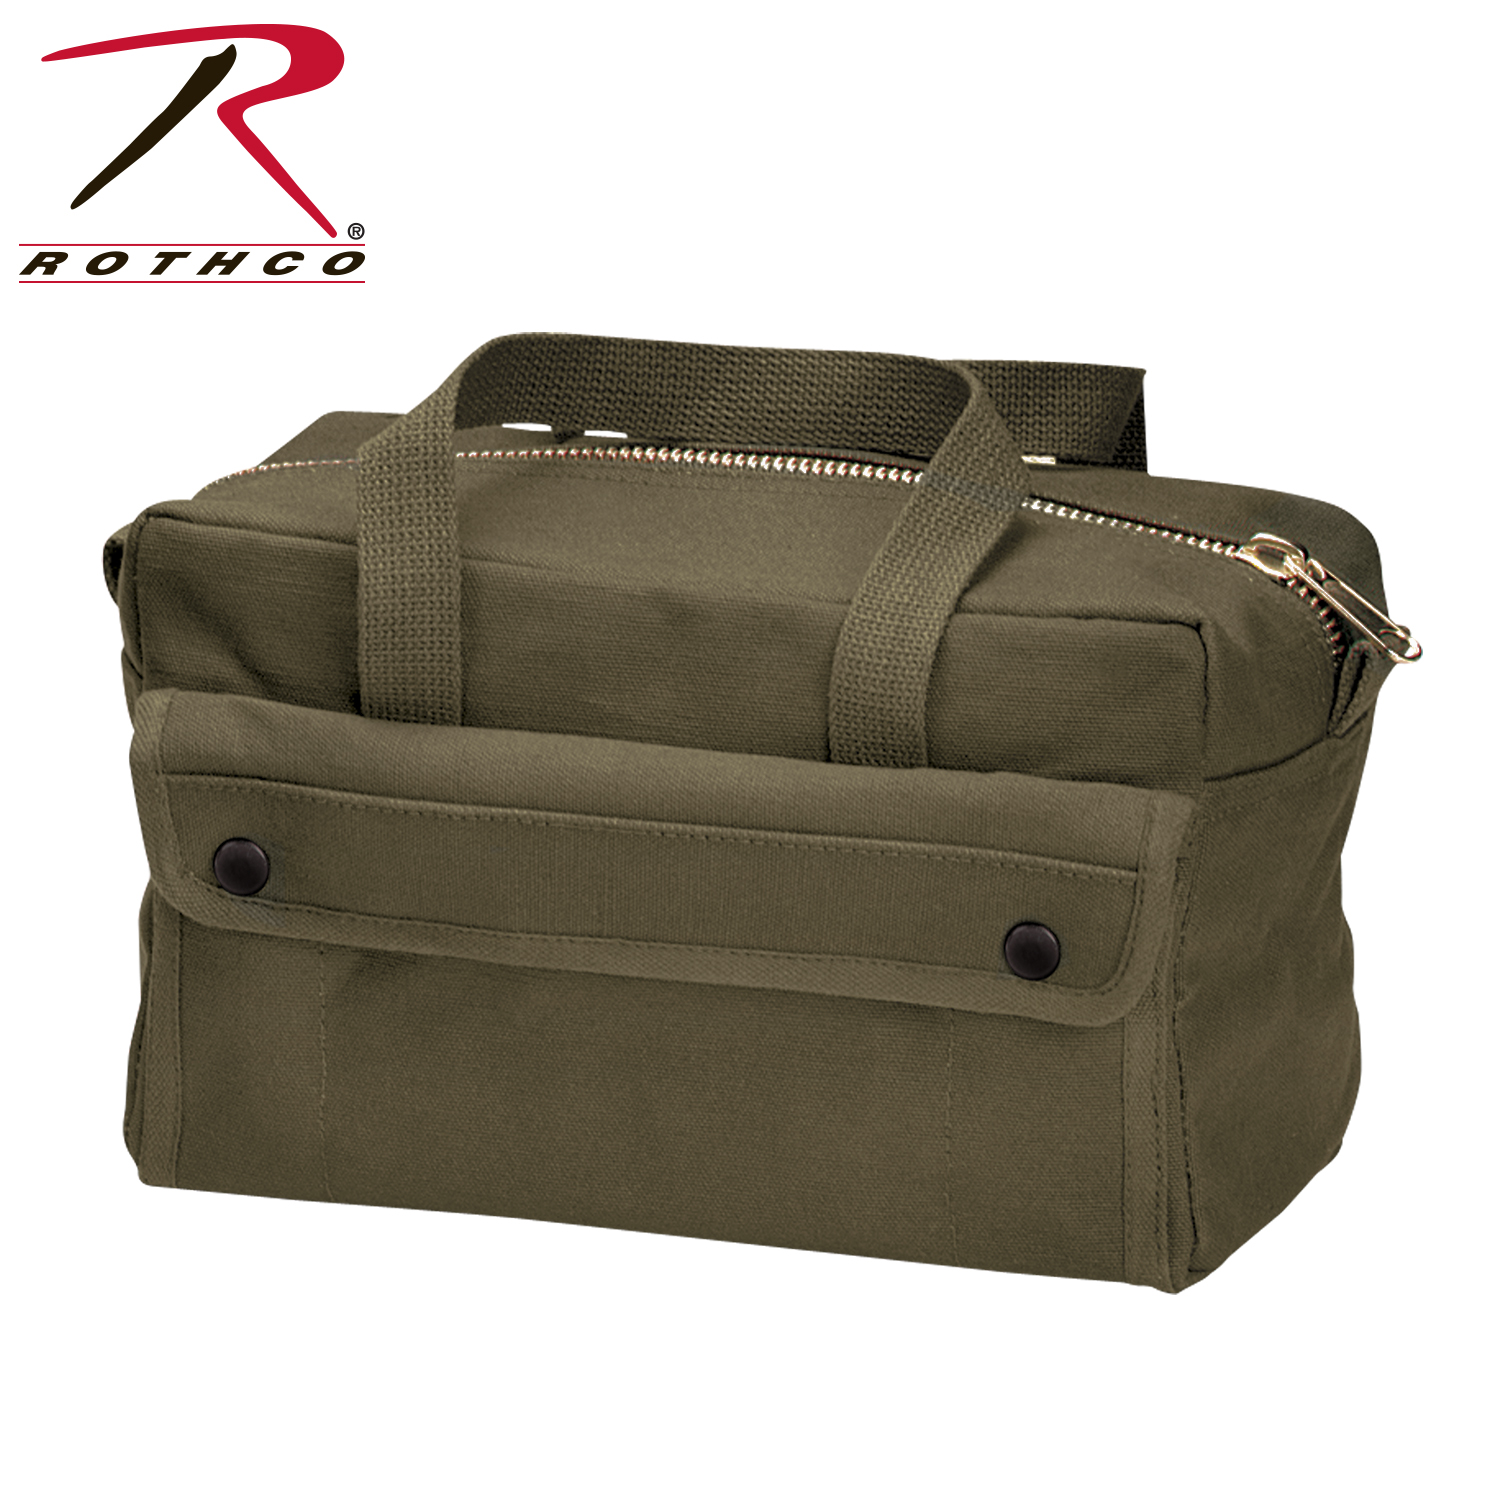 Rothco G.I. Type Mechanics Tool Bag With Brass Zipper